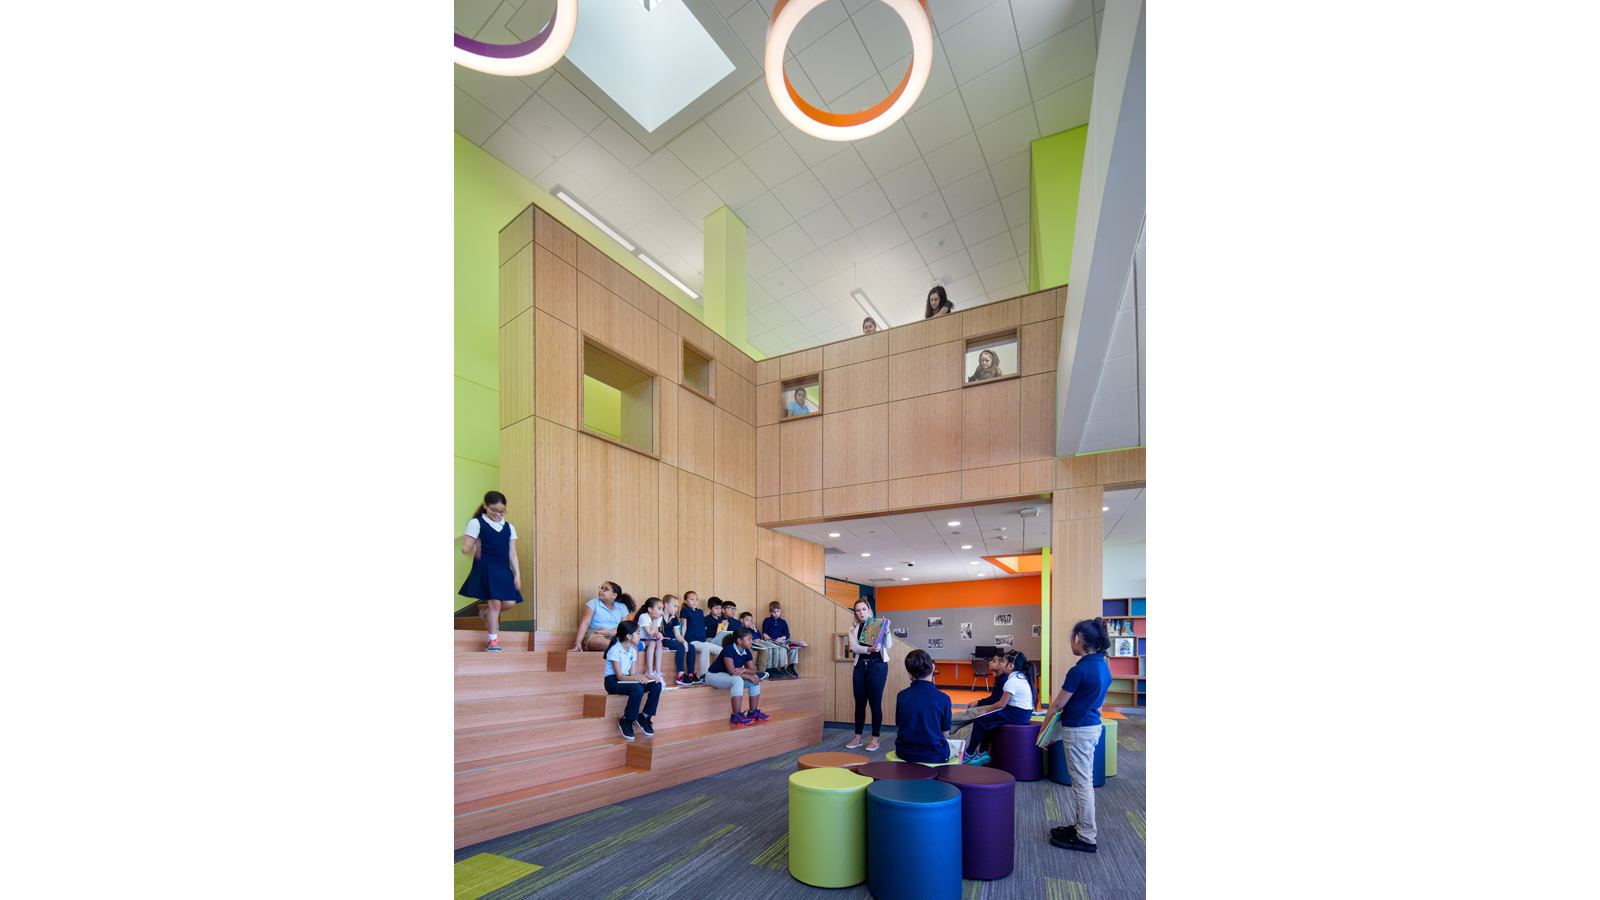 Irwin Jacobs Elementary School Interior, atrium/lobby with children sitting on stairs